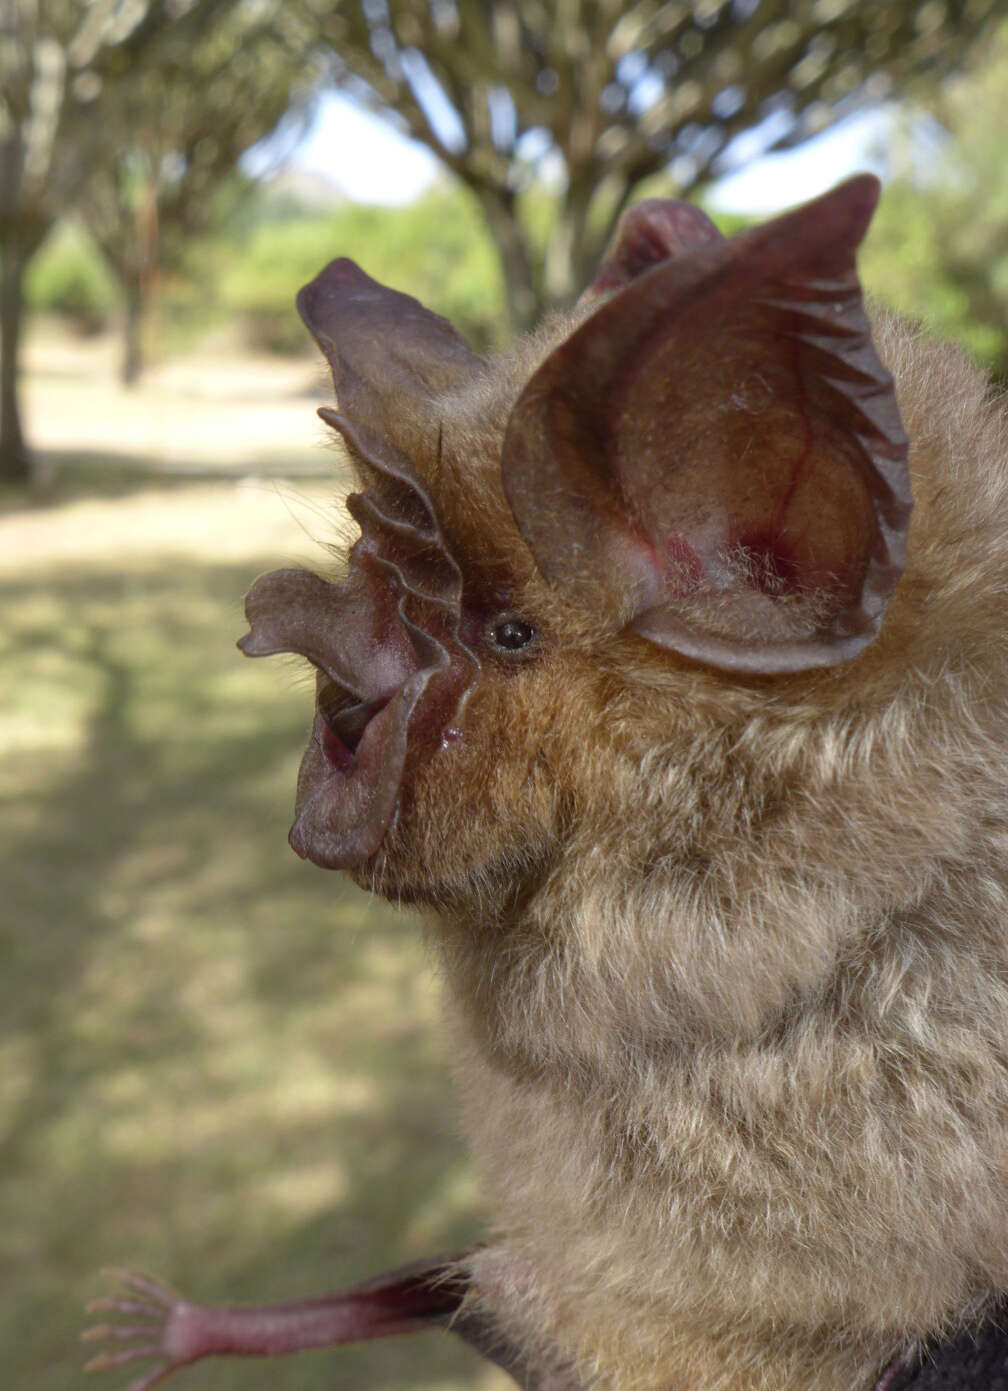 Image of Eloquent Horseshoe Bat